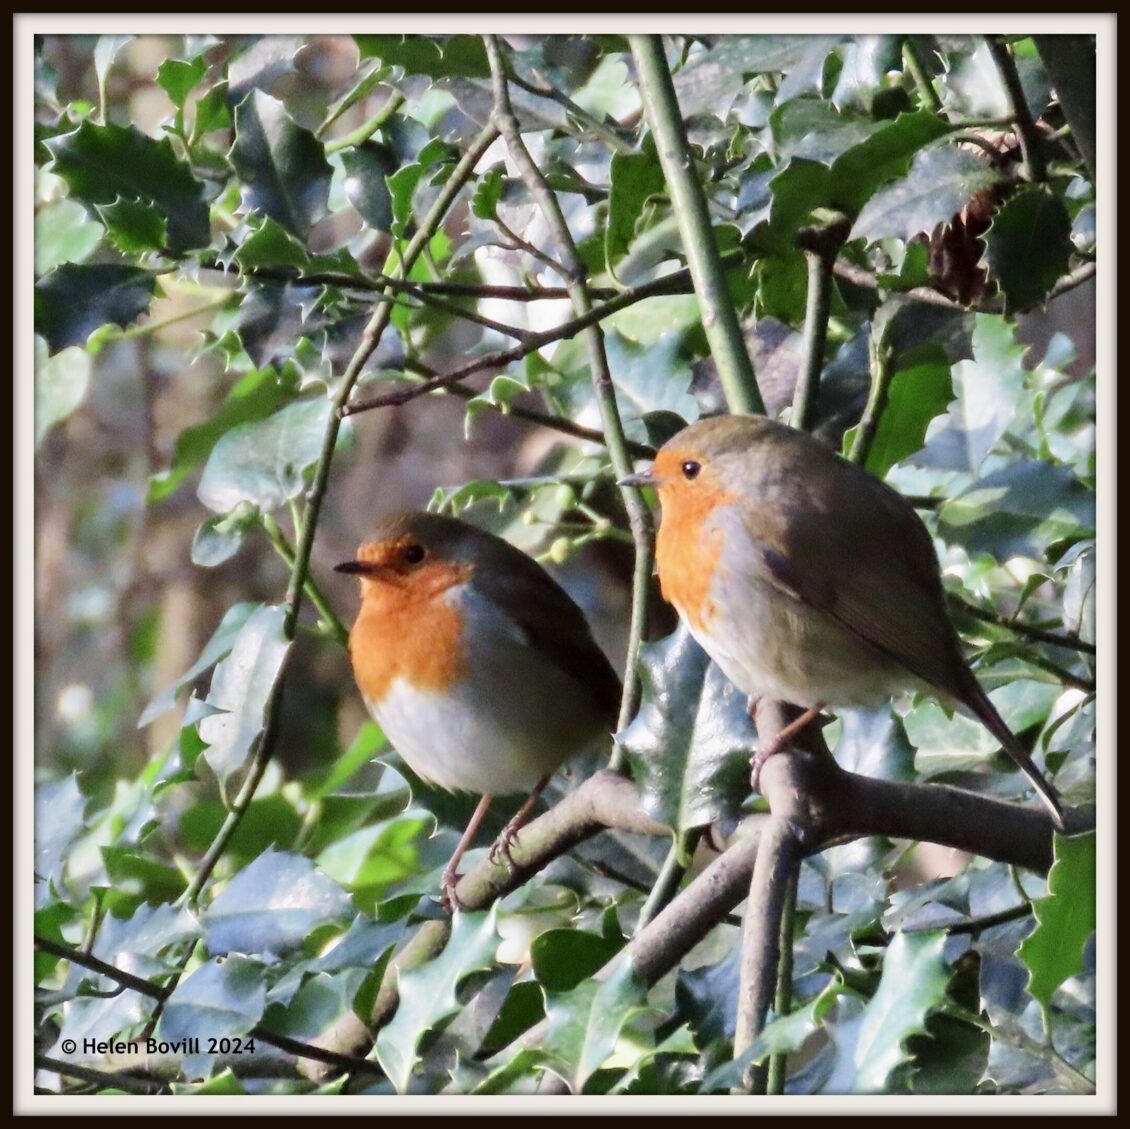 Two Robins sitting in a holly bush